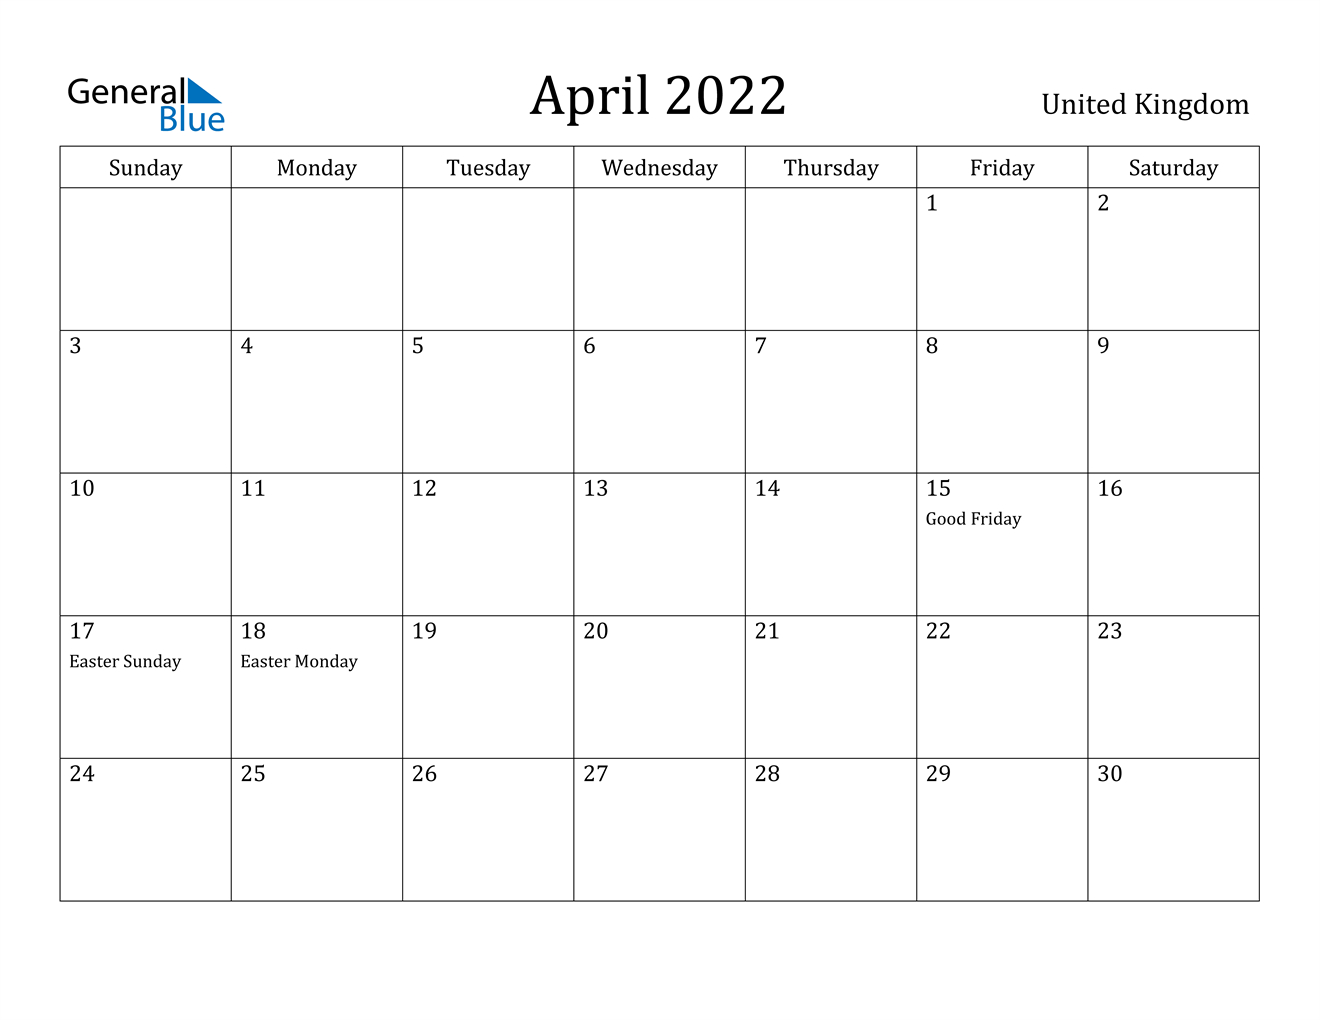 April 2022 Calendar - United Kingdom